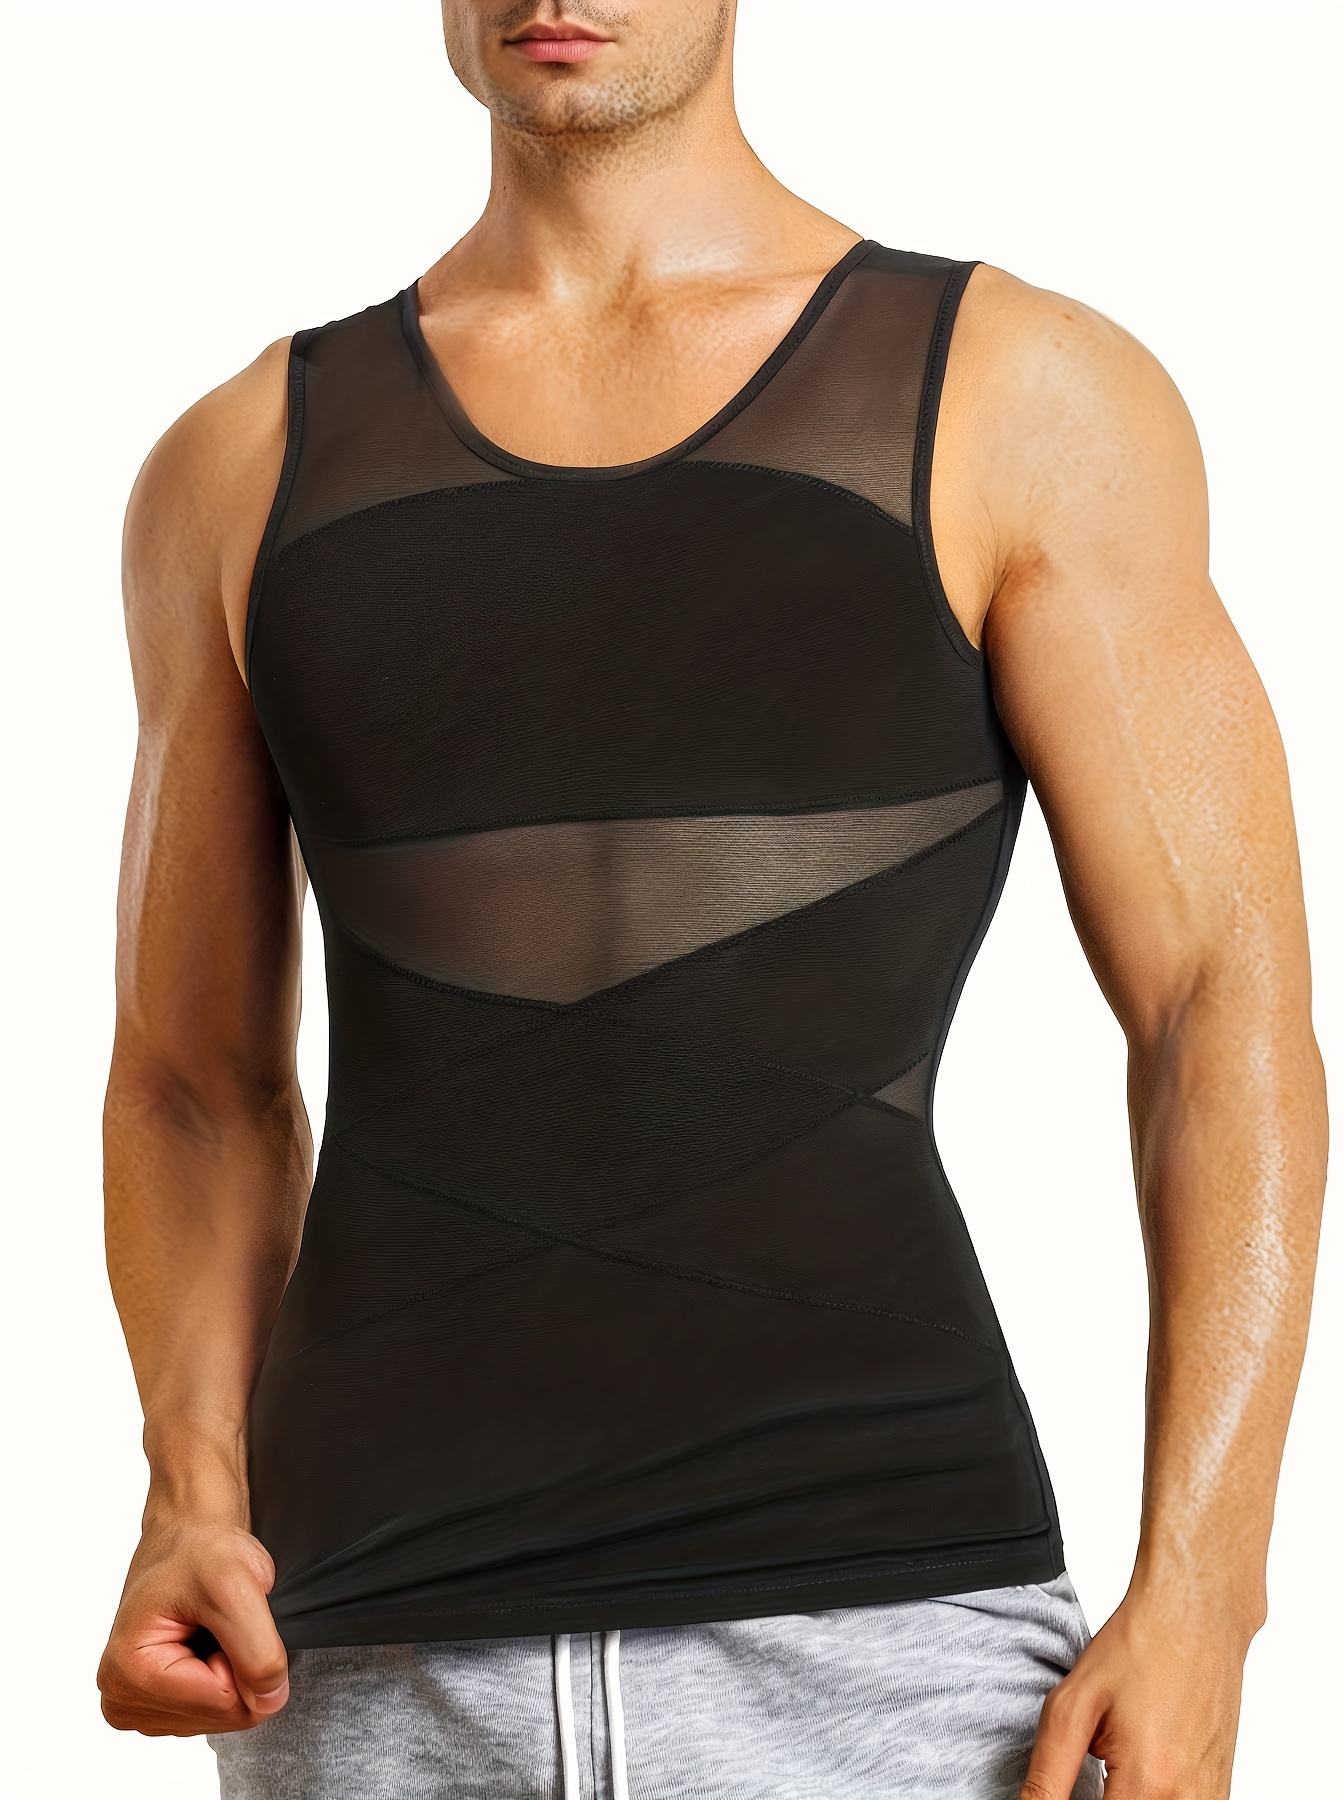 Junlan Men's Compression Shapewear Chest Binder Crop Top Body Shaper  Respirável Stretch Slimming Tight Undershirt Workout Vest Tank Top